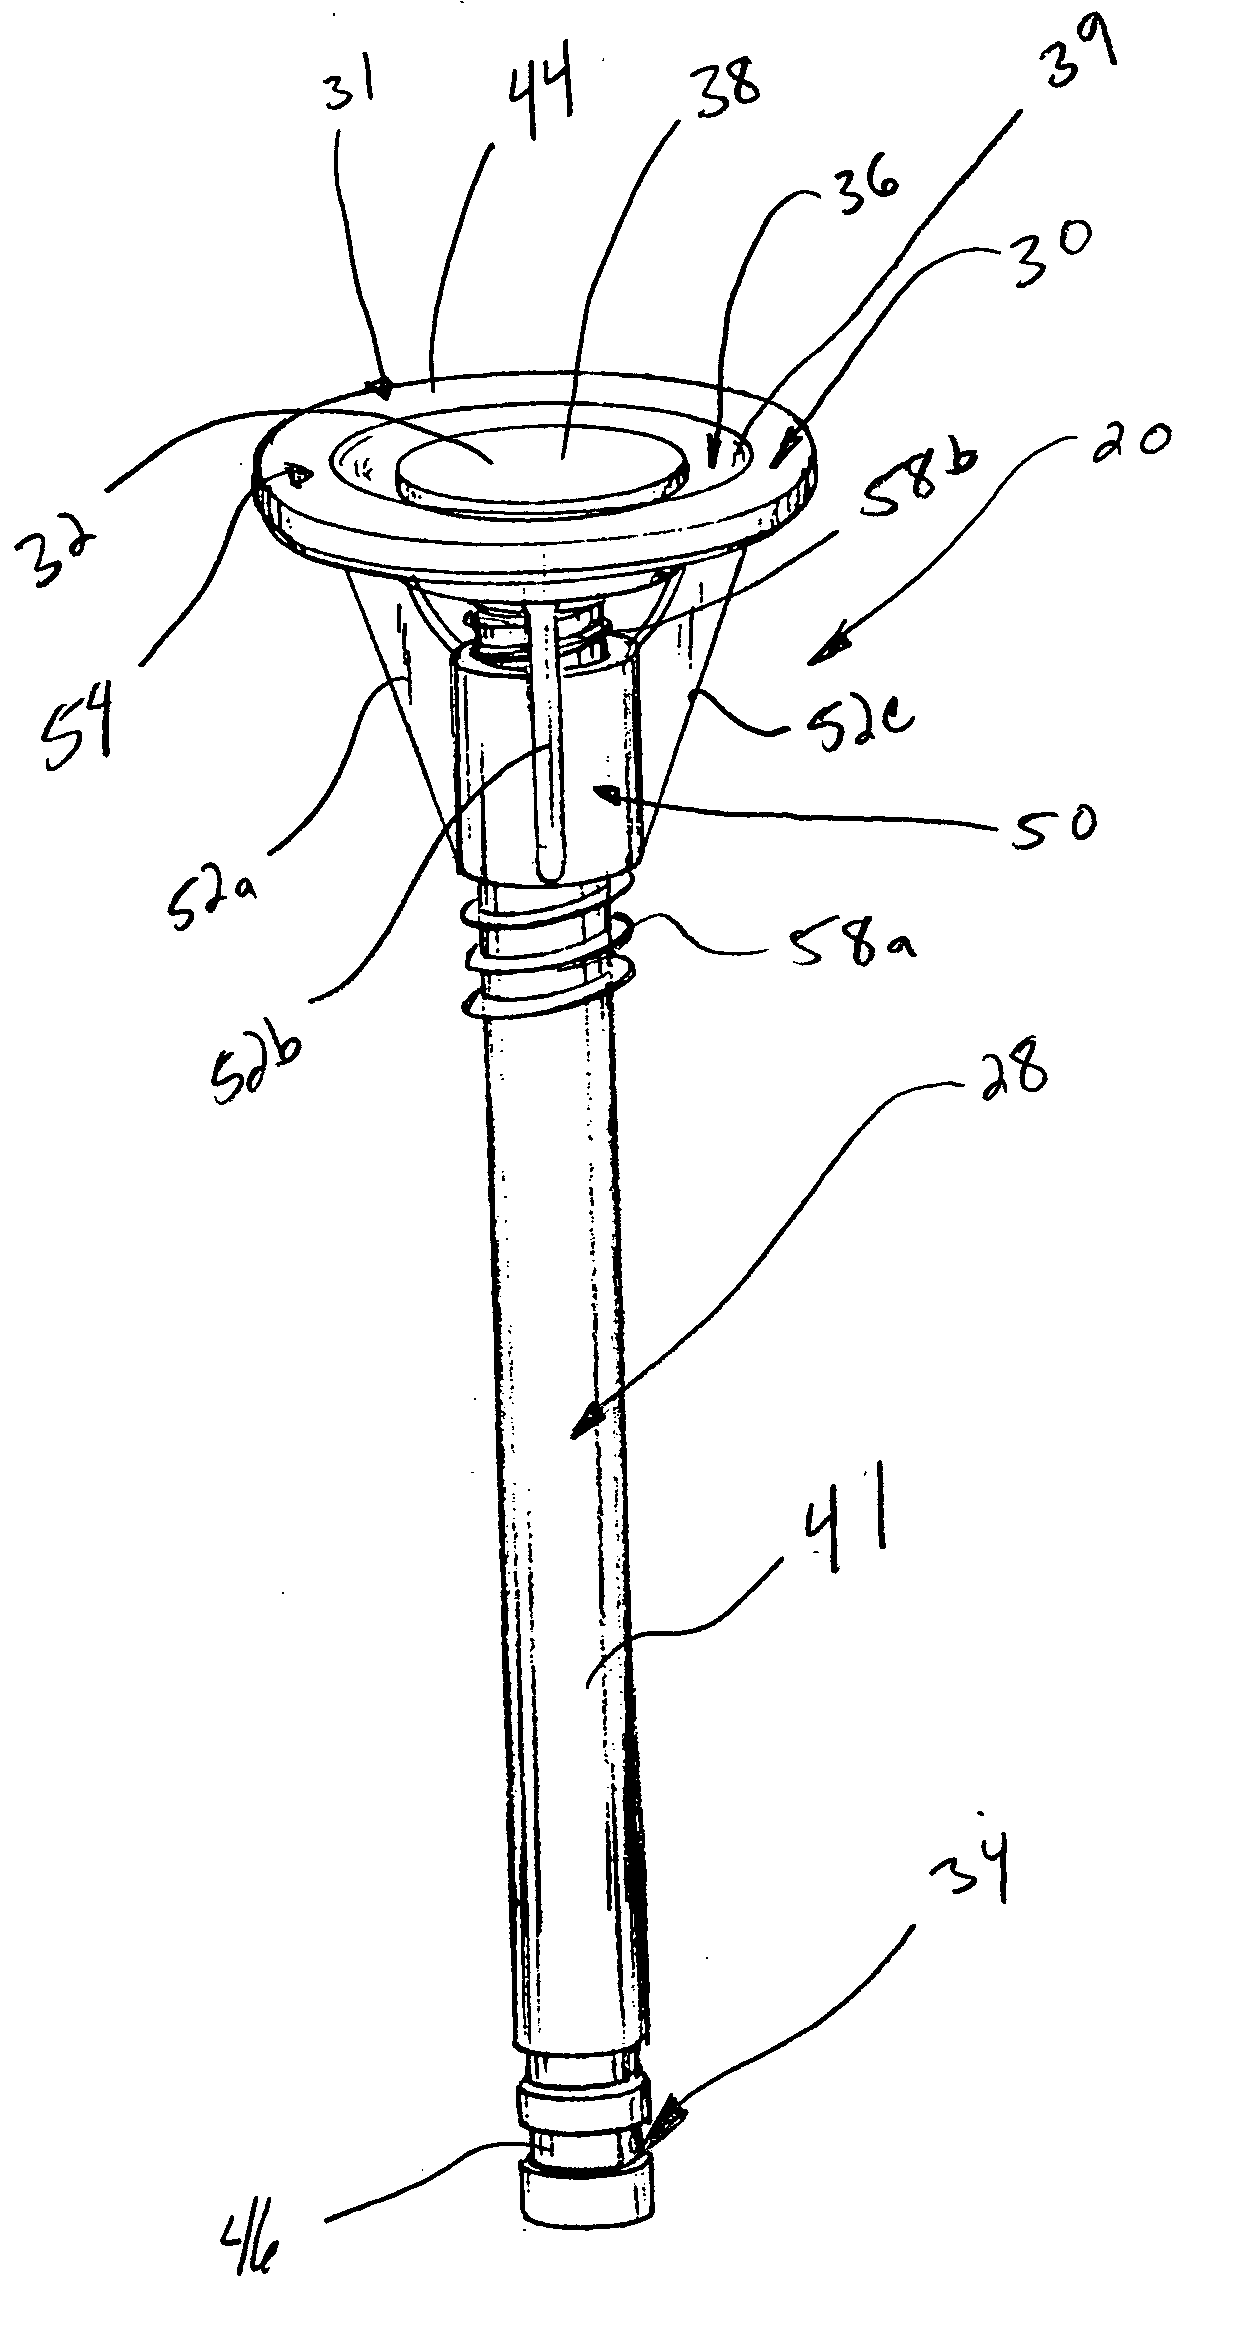 Coaxial poppet valve